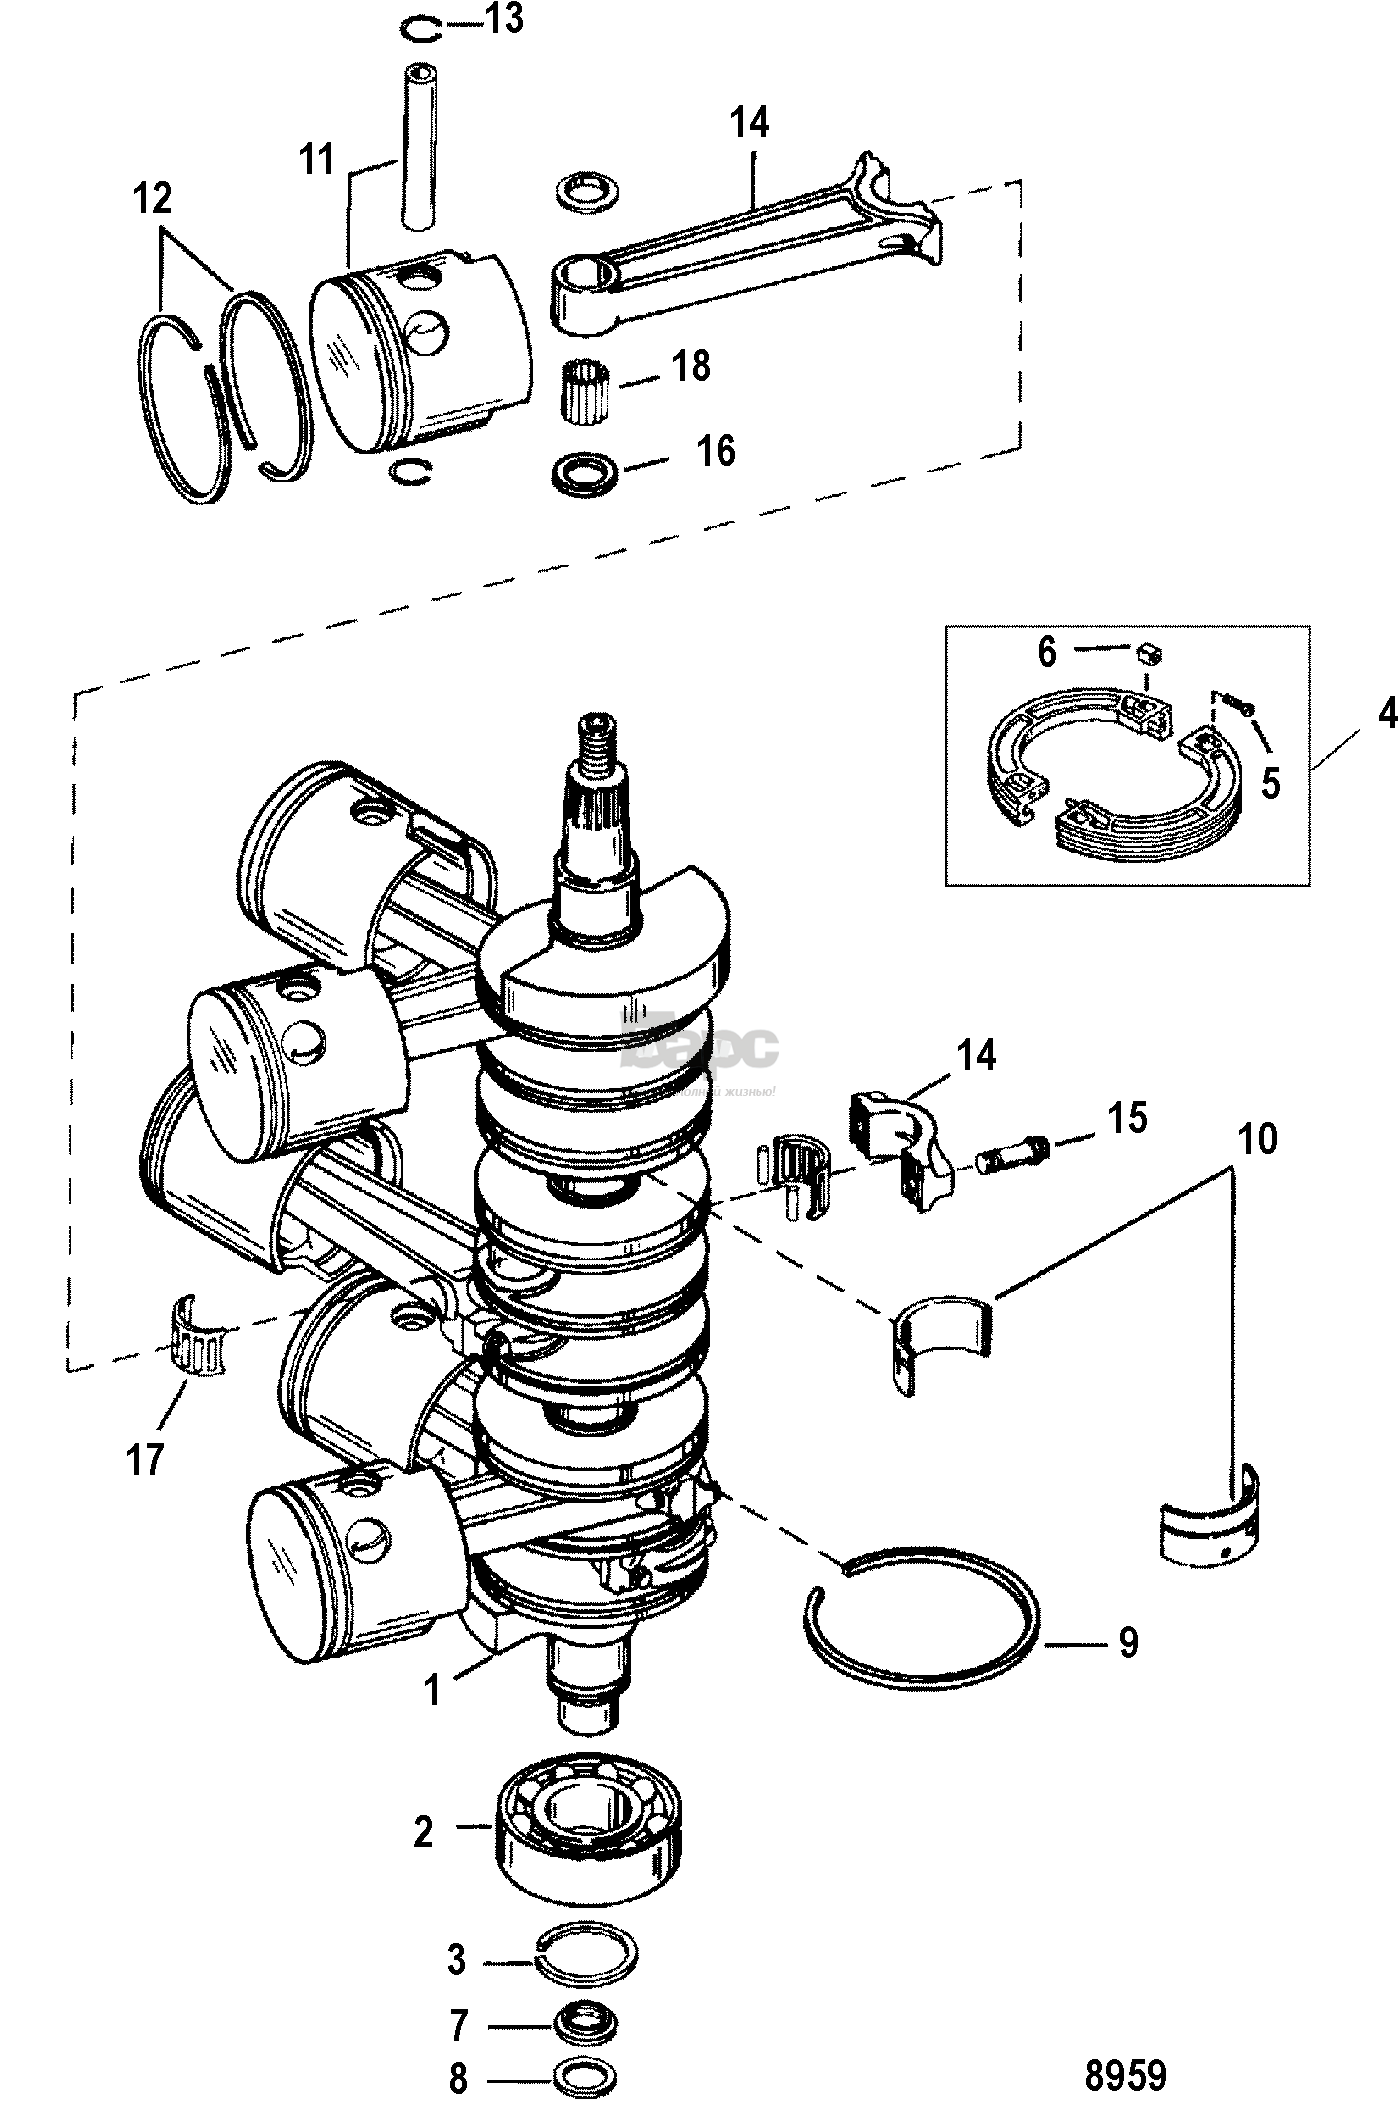 Crankshaft(Connecting Rod Forging # is 636-8118)